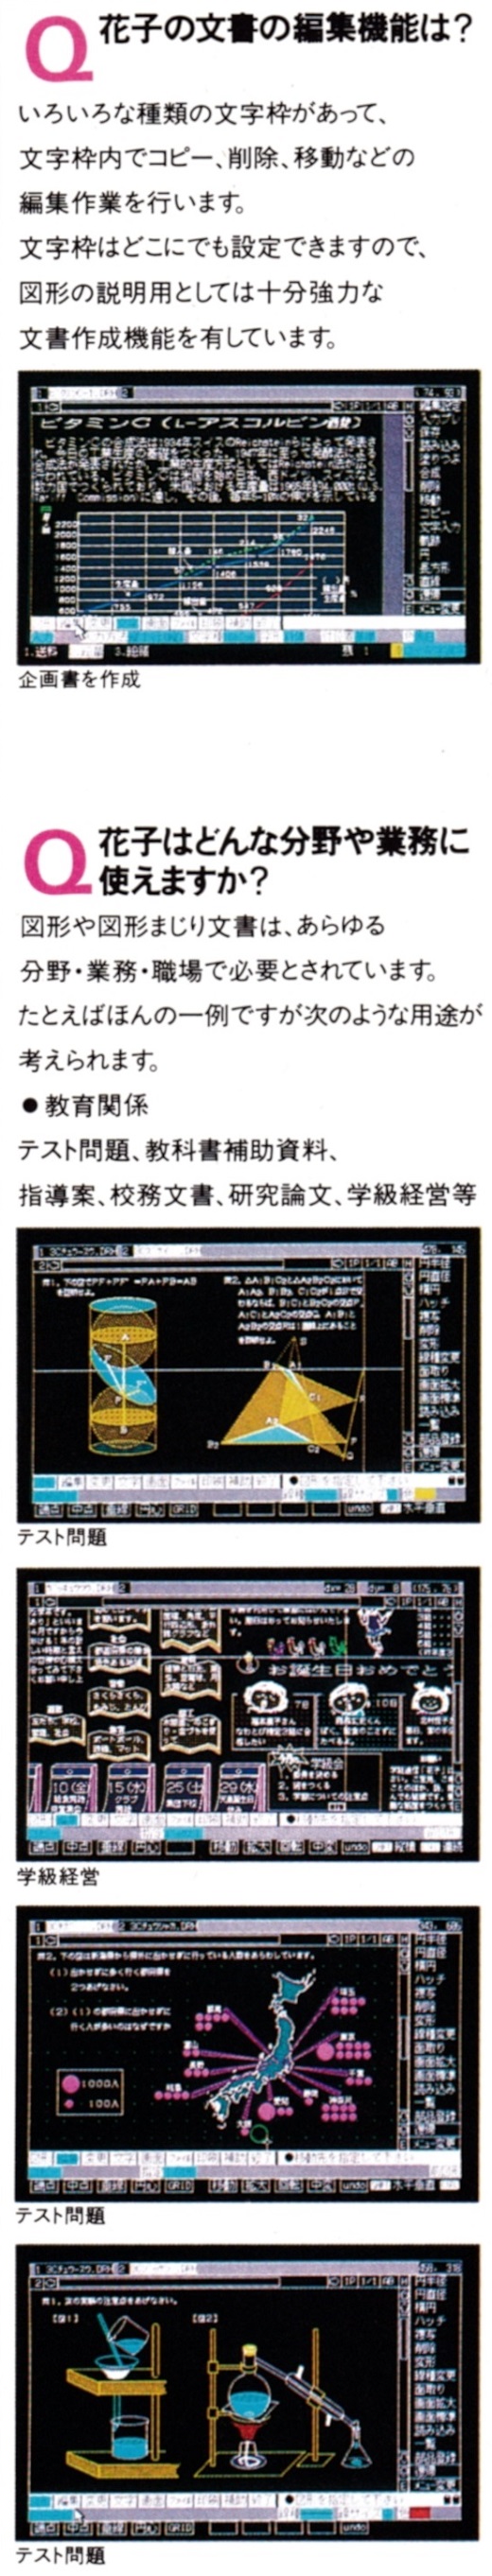 ASCII1987(04)a17花子説明07_W520.jpg